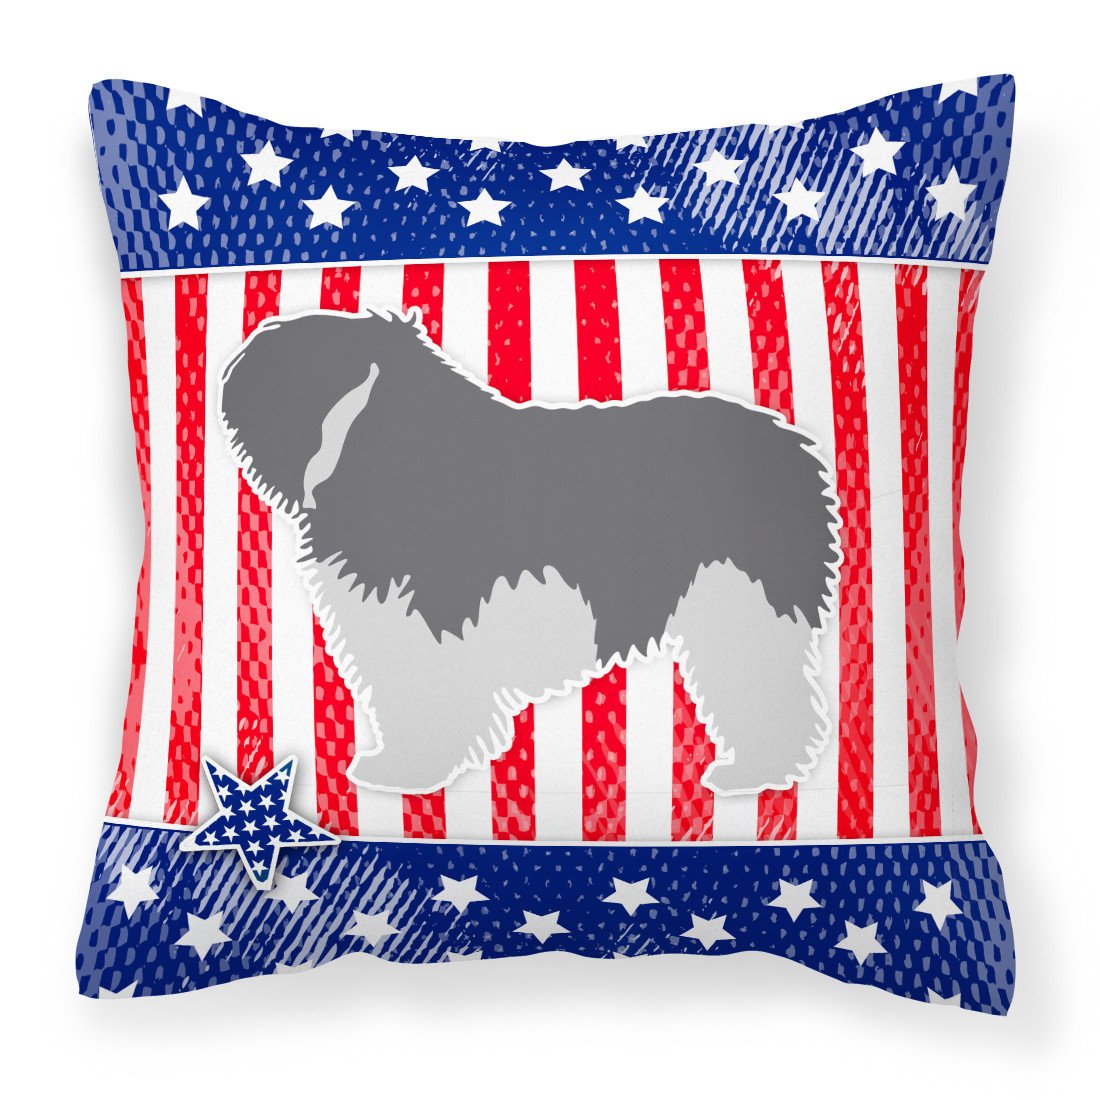 USA Patriotic Polish Lowland Sheepdog Dog Fabric Decorative Pillow BB3332PW1818 by Caroline's Treasures